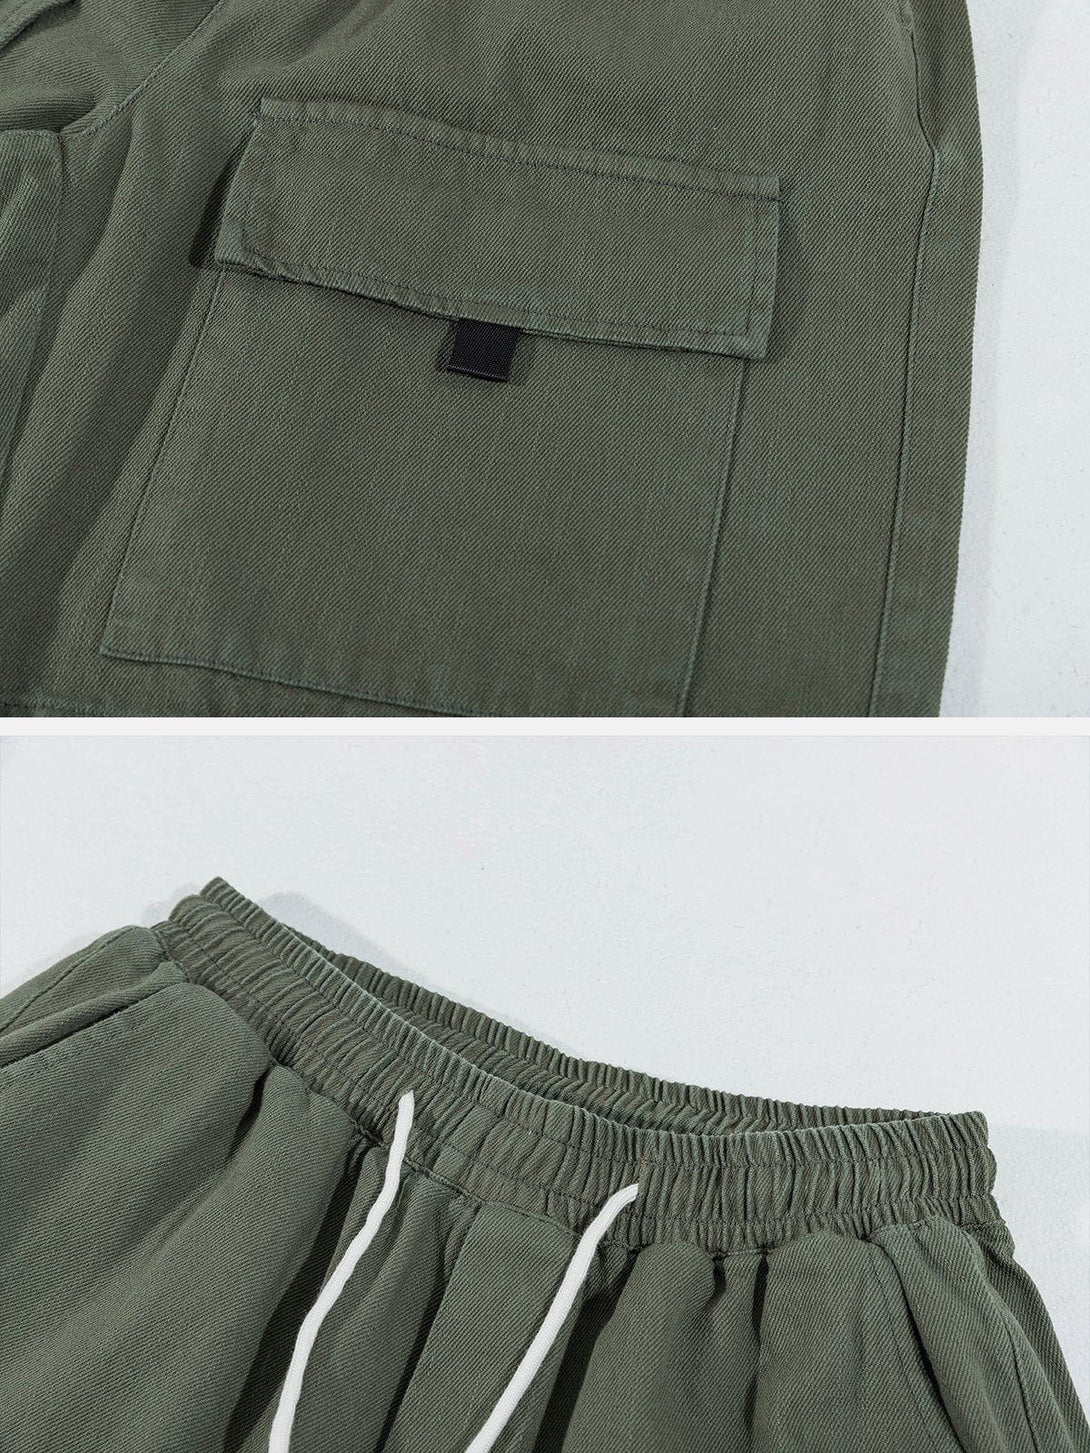 Majesda® - Large Pocket Drawstring Shorts outfit ideas streetwear fashion